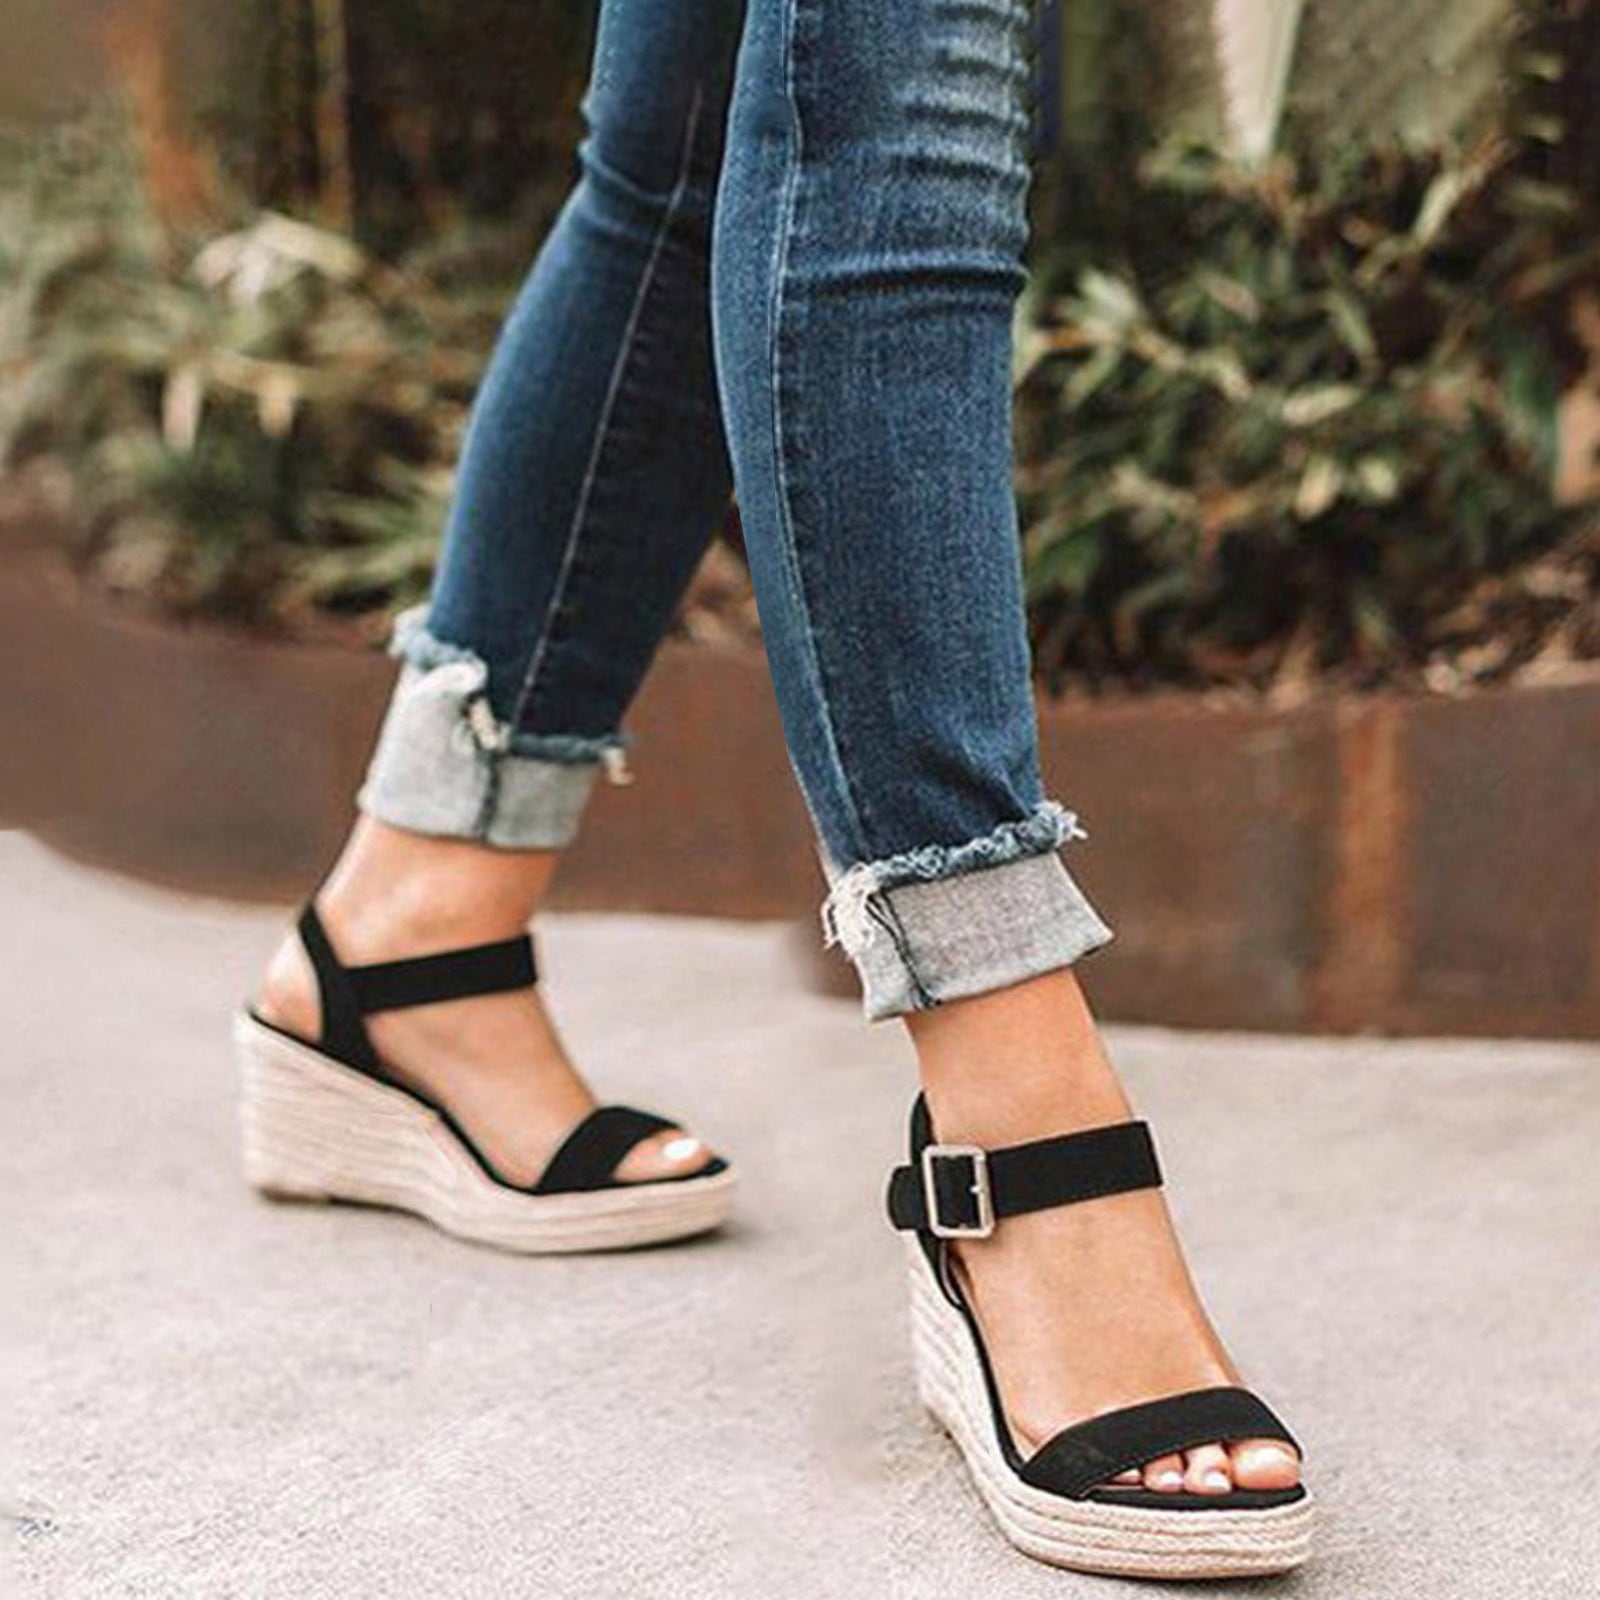 Tan Wedges Sandals Ankle Strap Slingback Open Toe Platform Sandals|FSJshoes